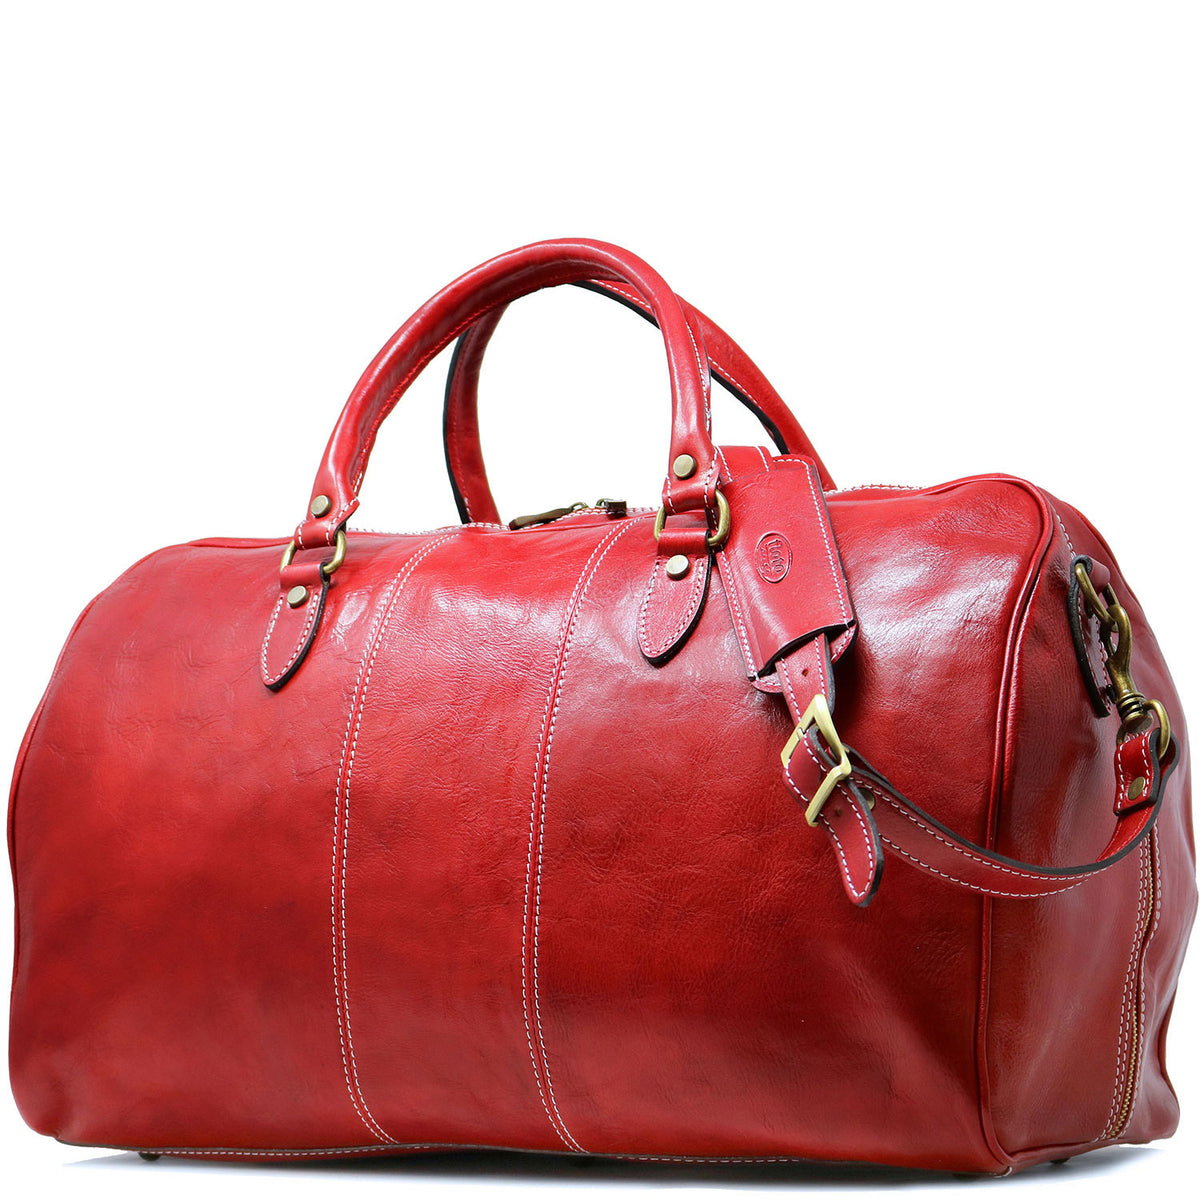 Lifetime Warranty Leather Duffle Bag Travel Bag for Men Women